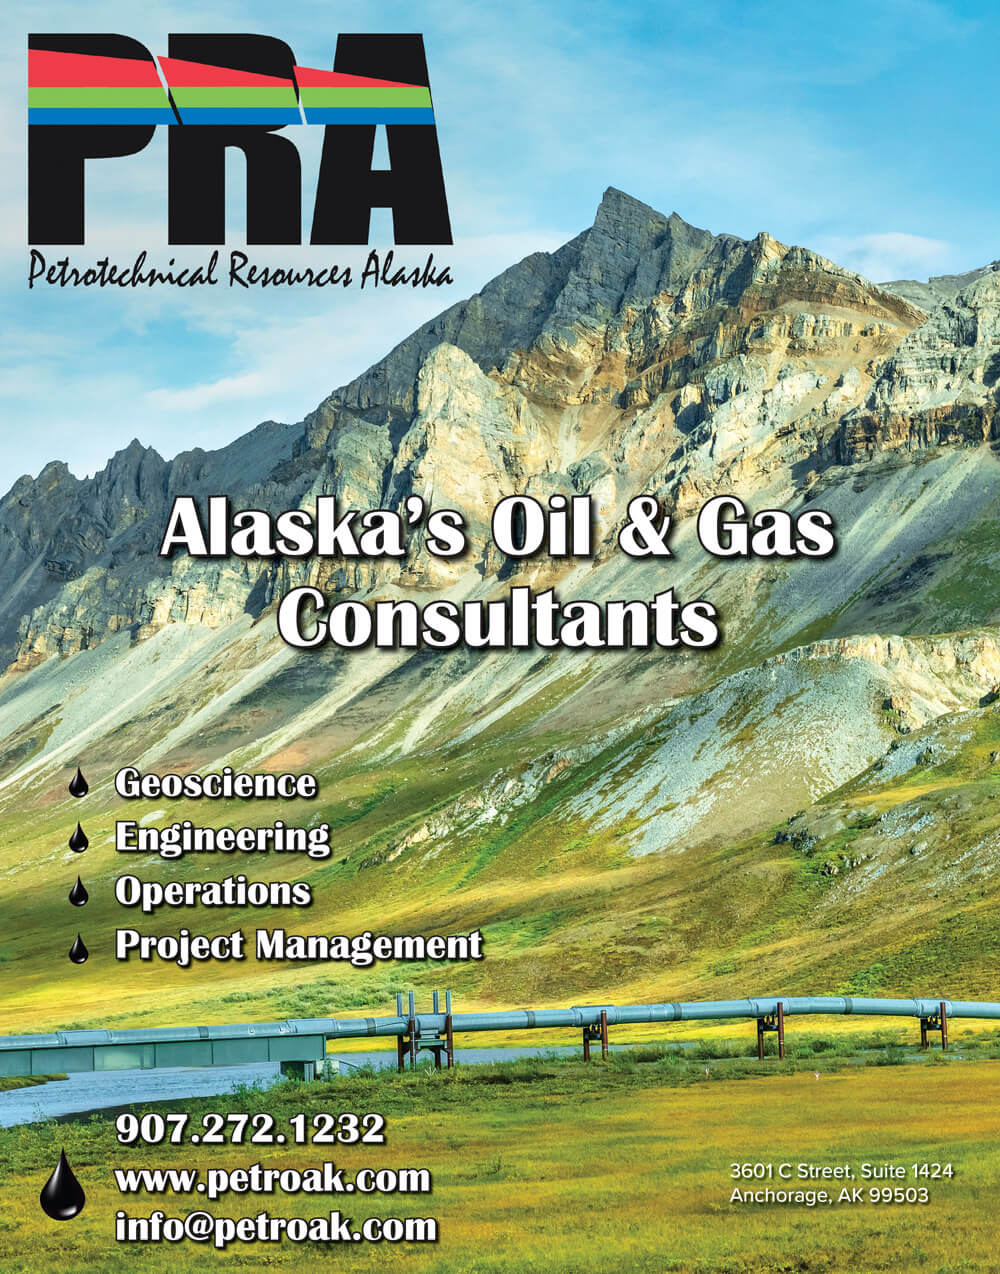 Petrotechnical Resources Alaska Advertisement